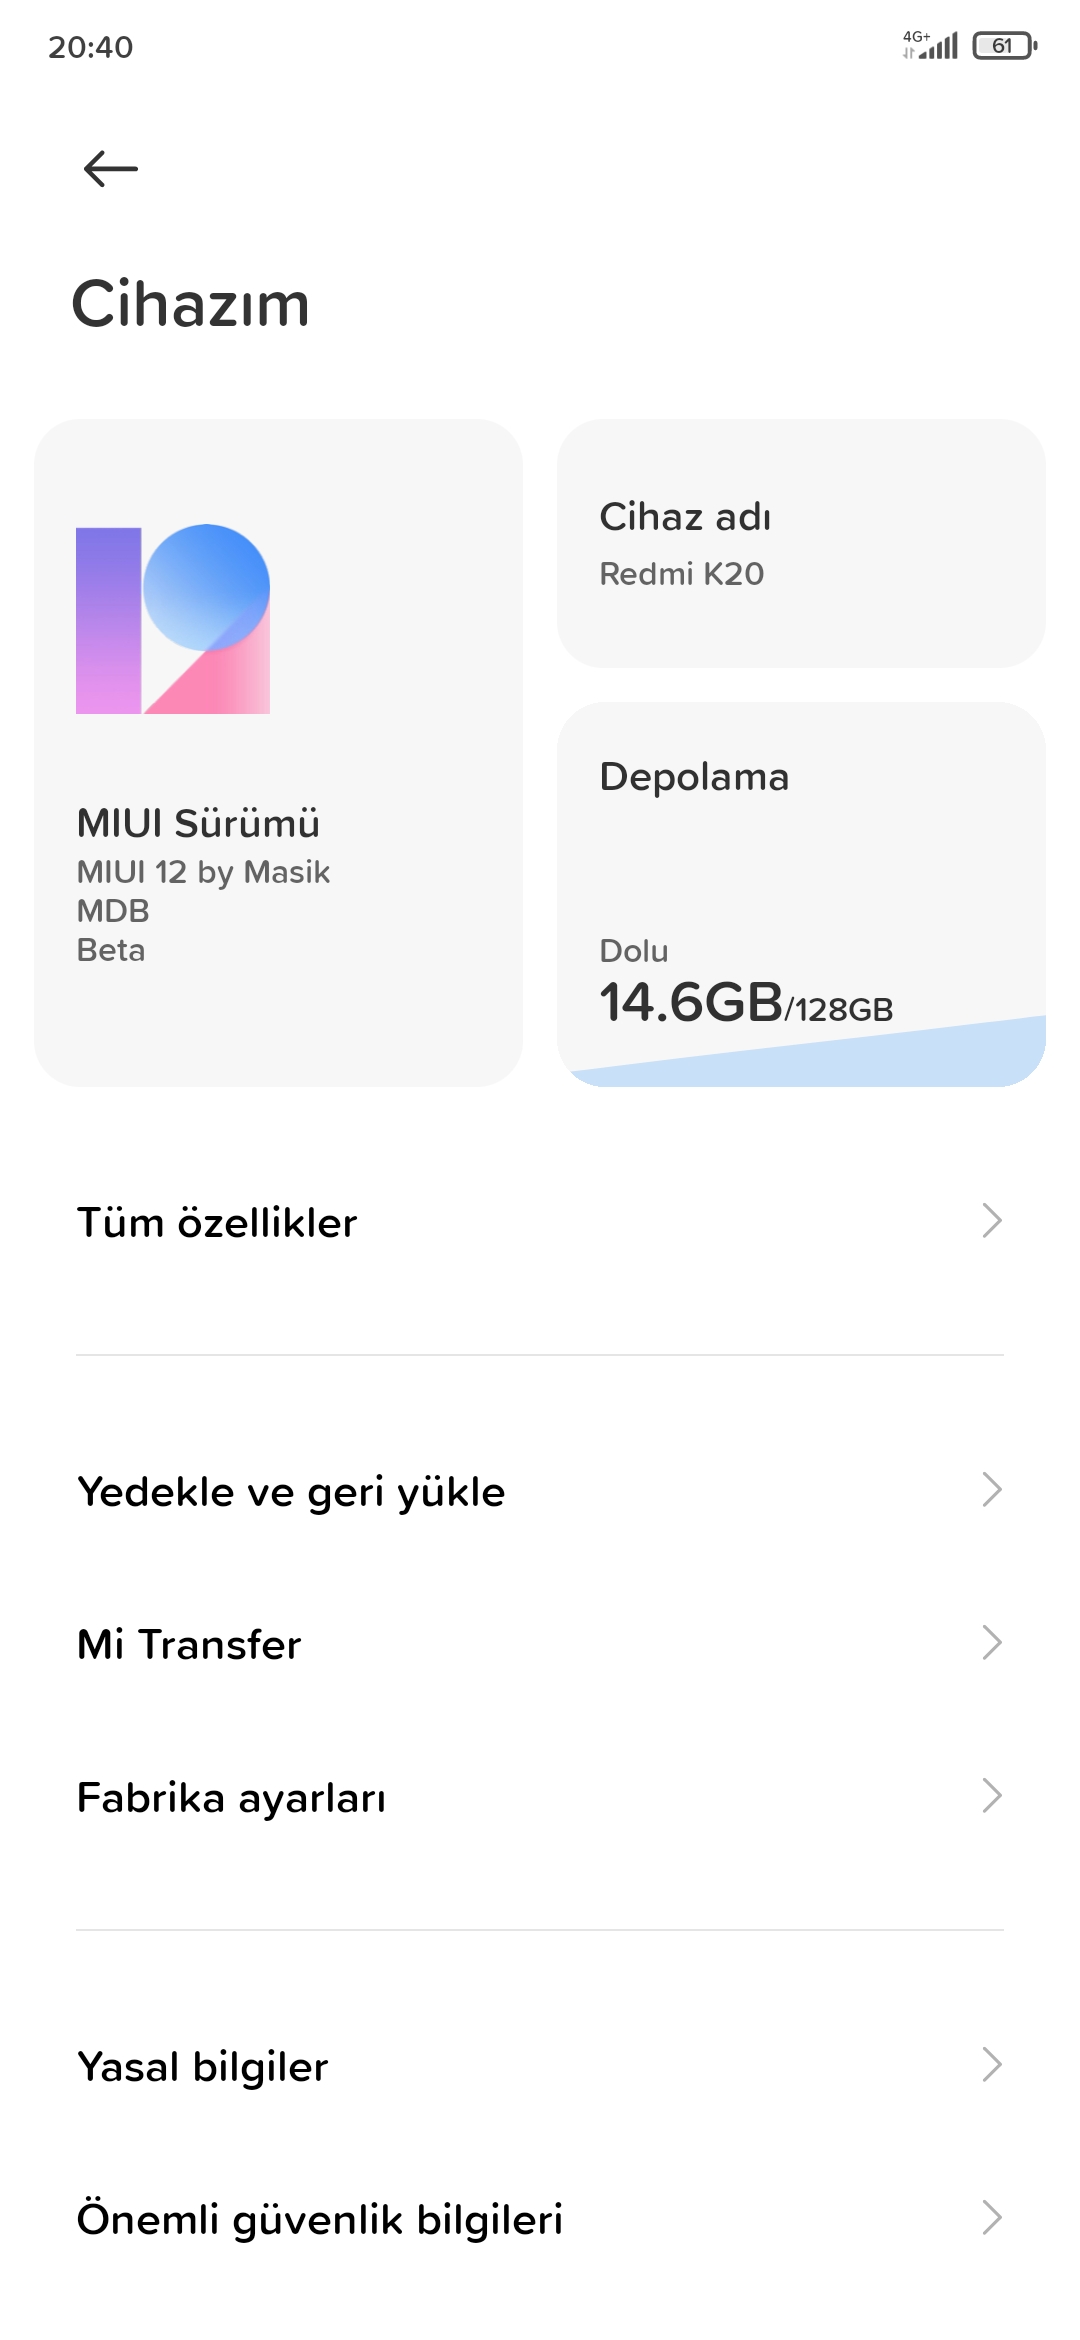 MIUI 12 Note 8 Pro